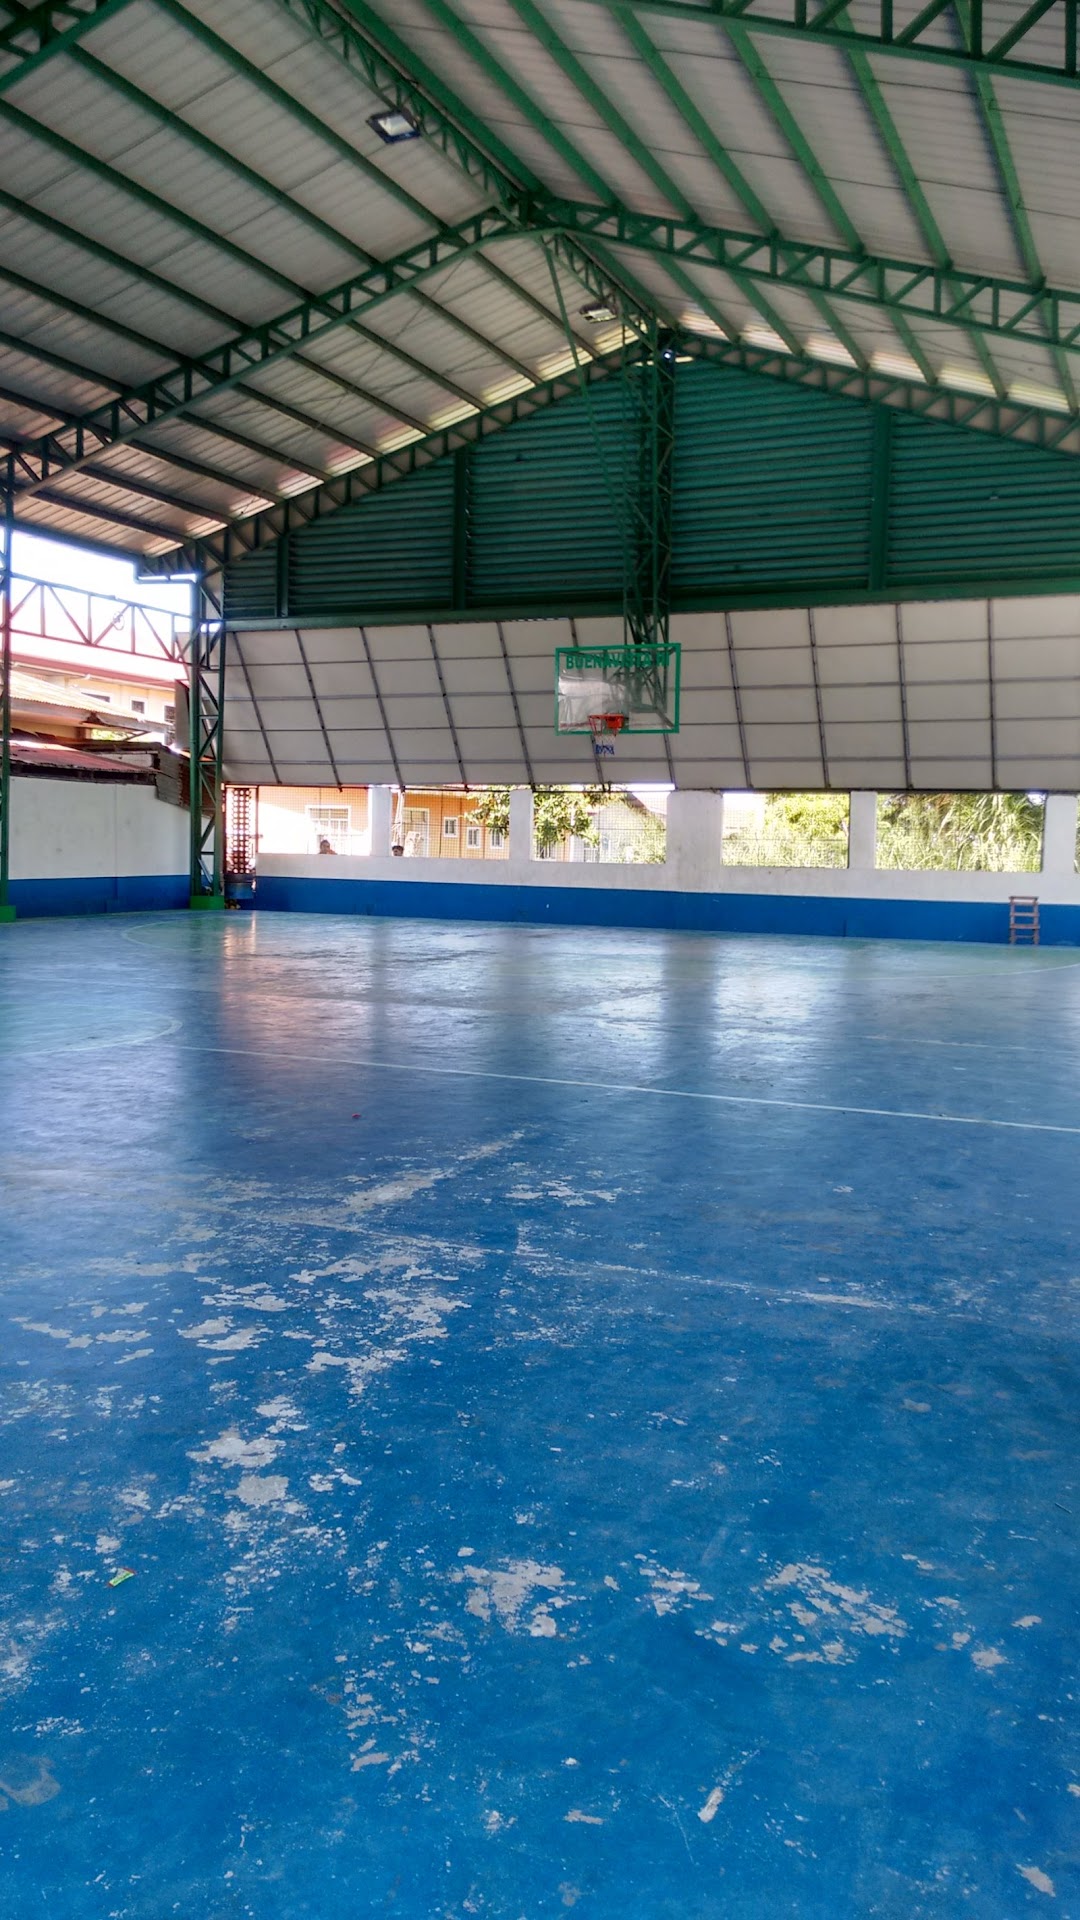 Buenavista 3 Basketball Covered Court